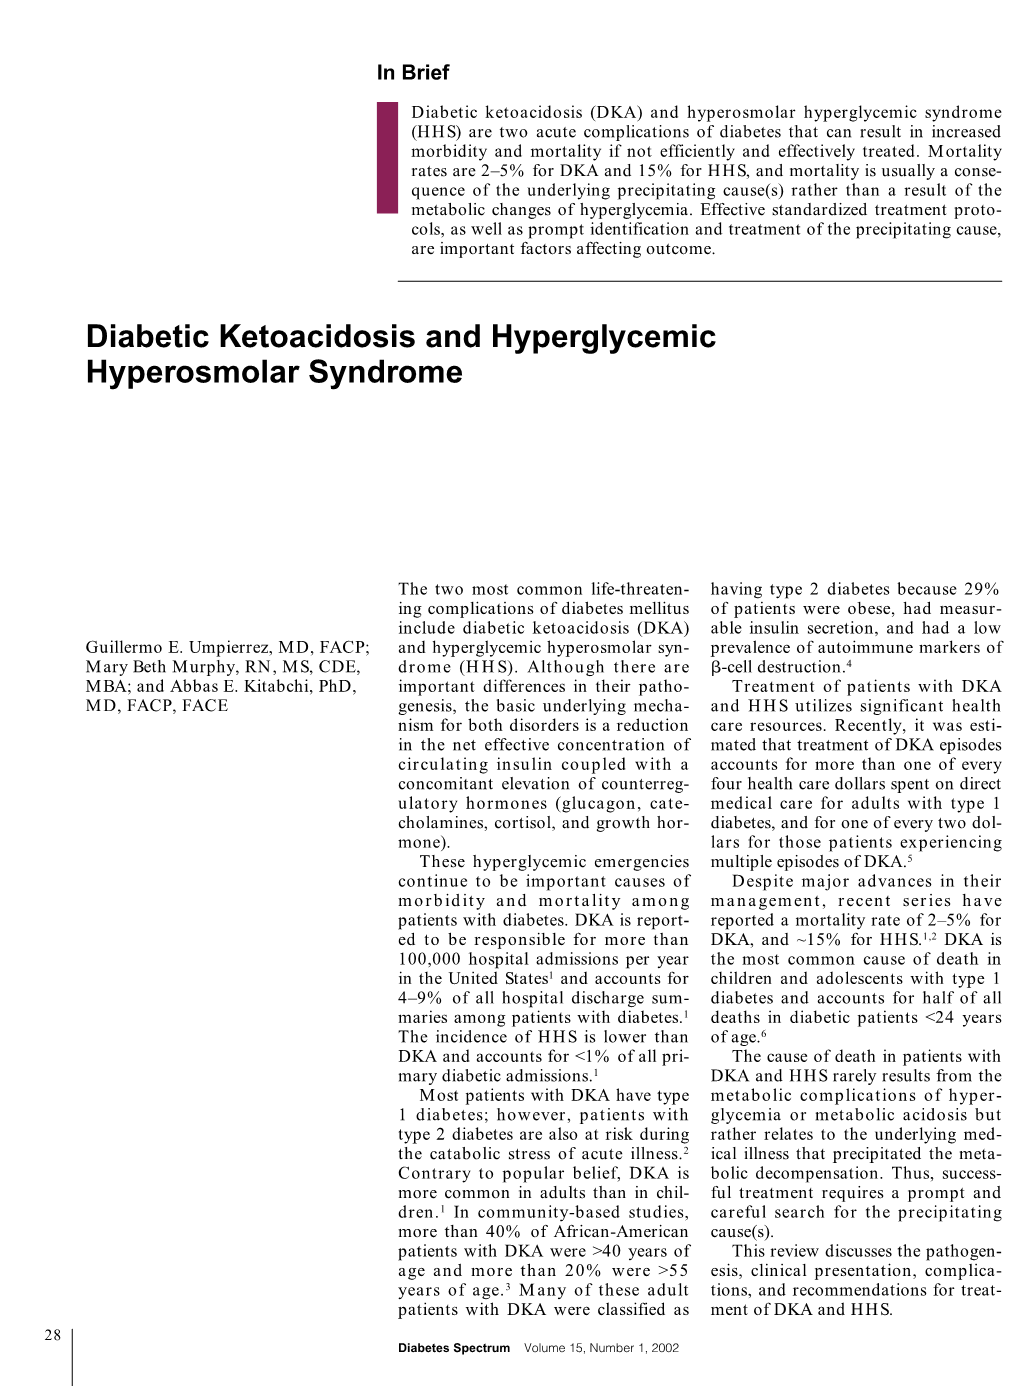 Diabetic Ketoacidosis and Hyperglycemic Hyperosmolar Syndrome